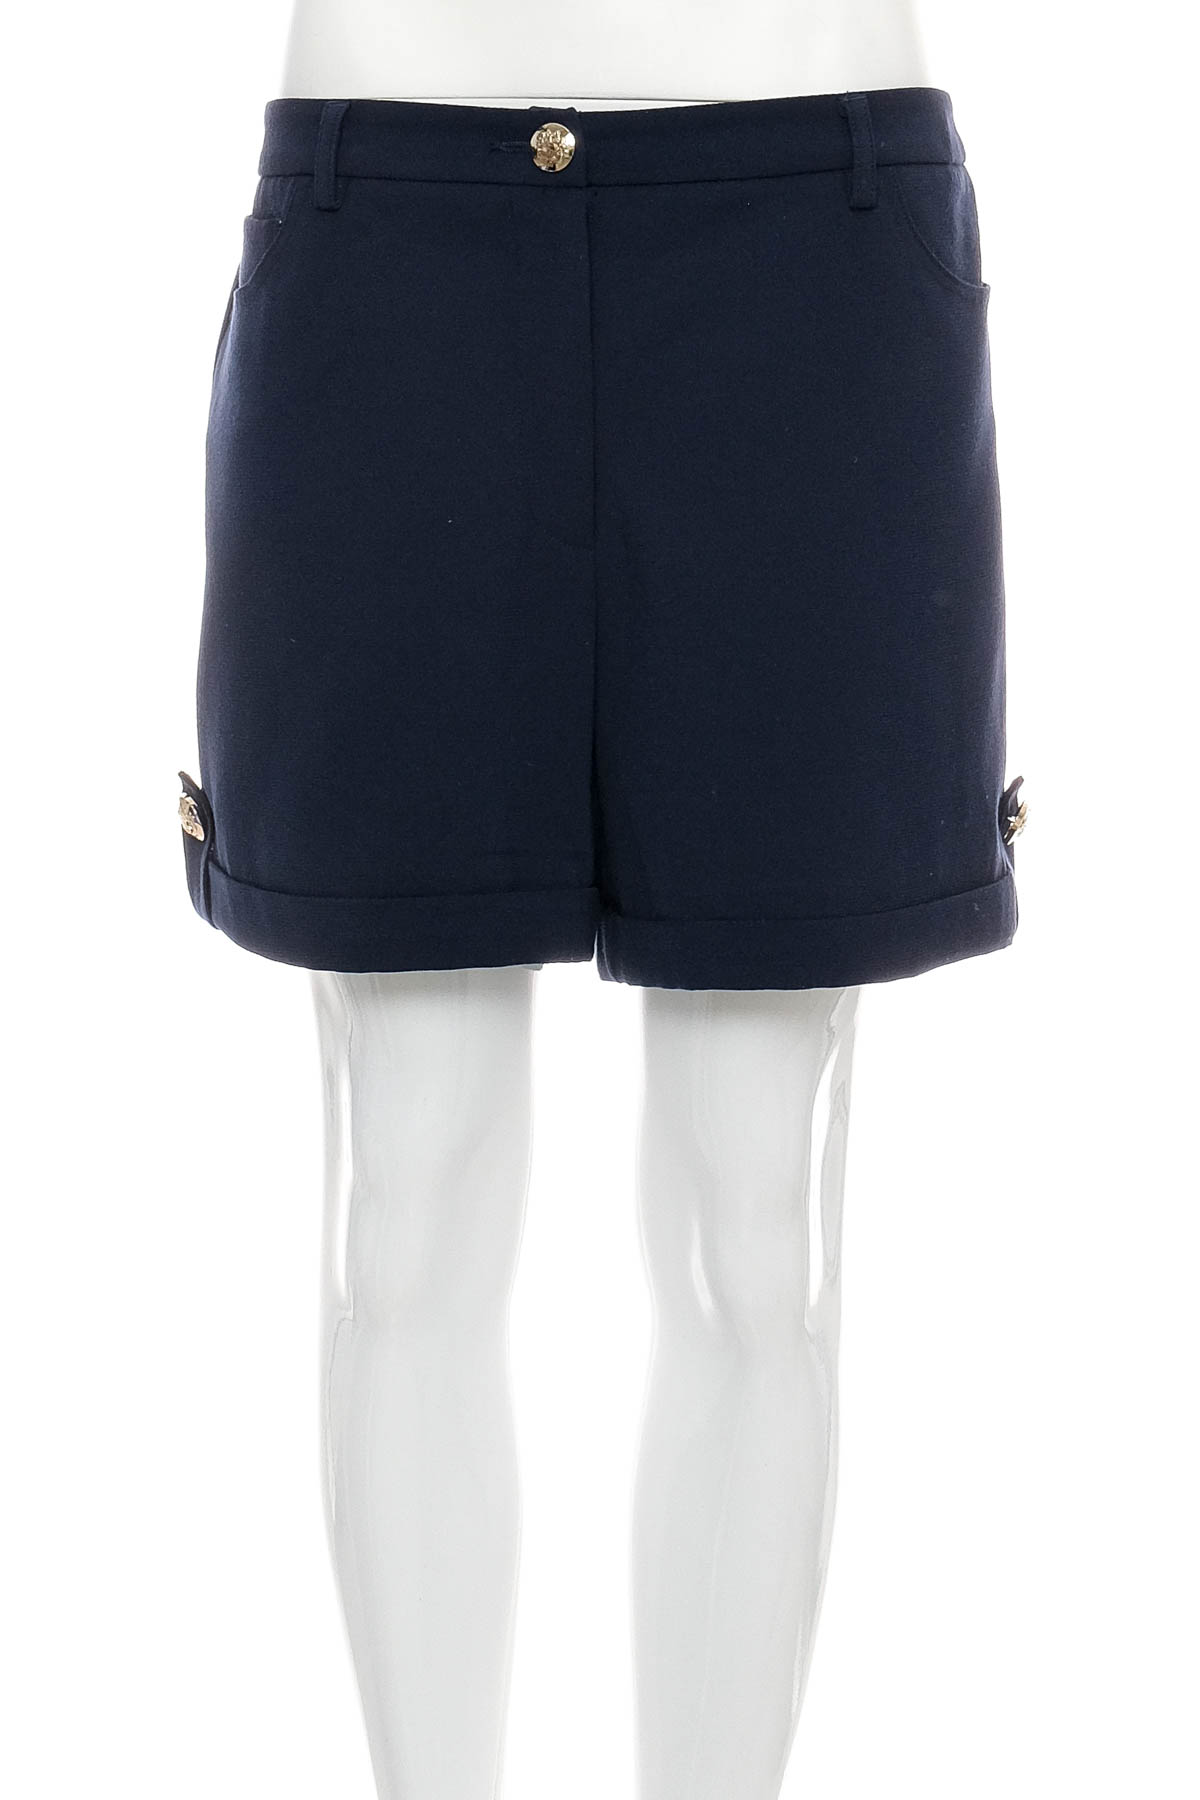 Female shorts - Alba Moda - 0